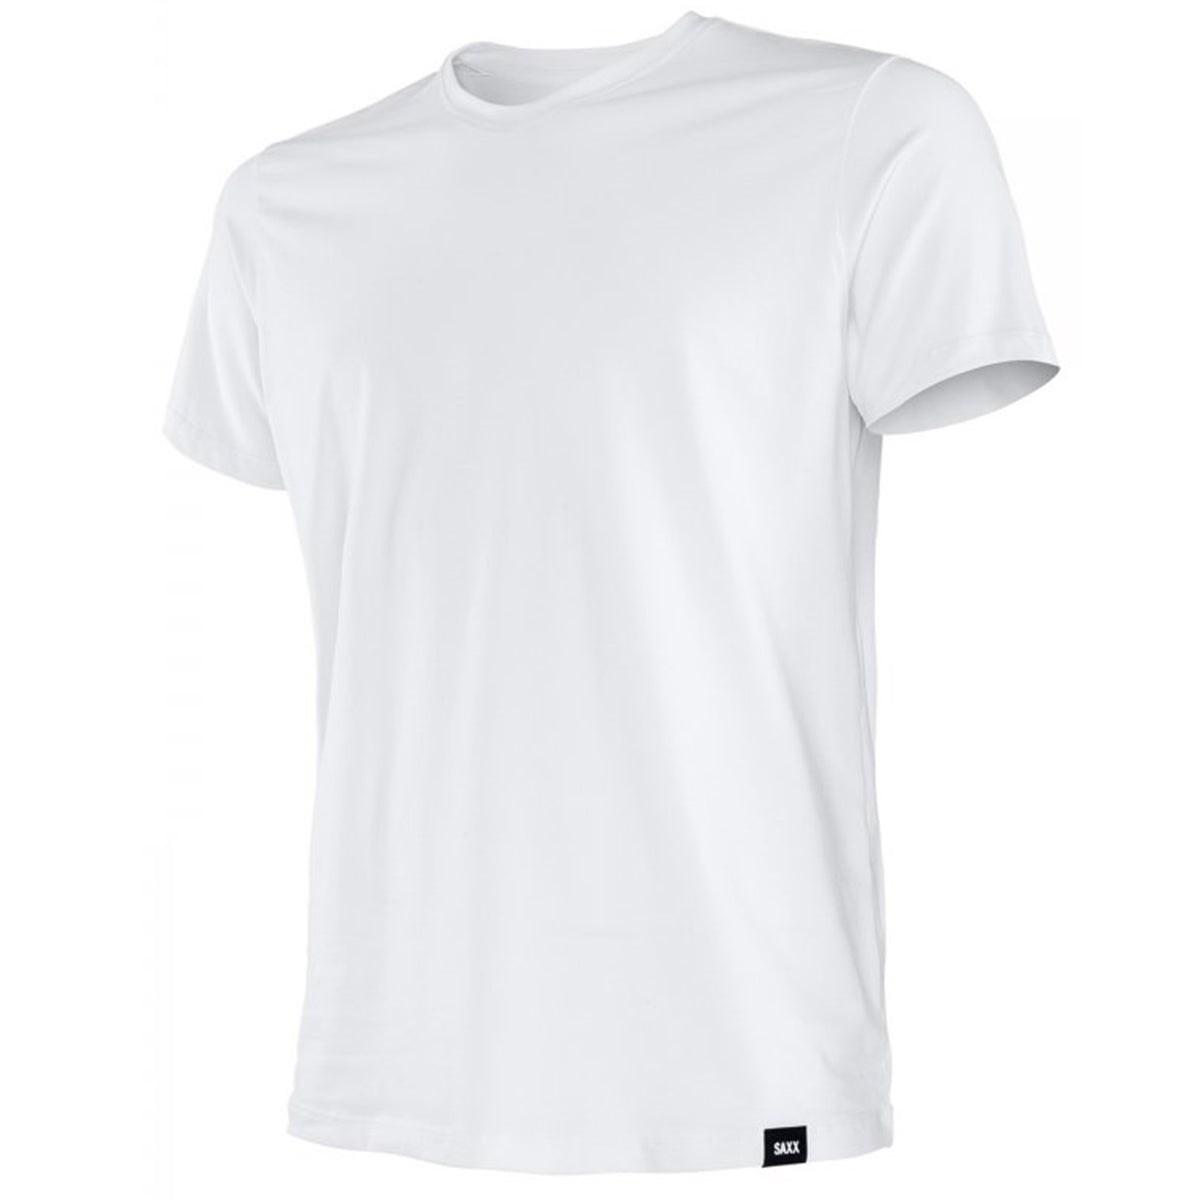 Saxx 3Six Five Crew Neck Men's Short-Sleeve Shirts - White